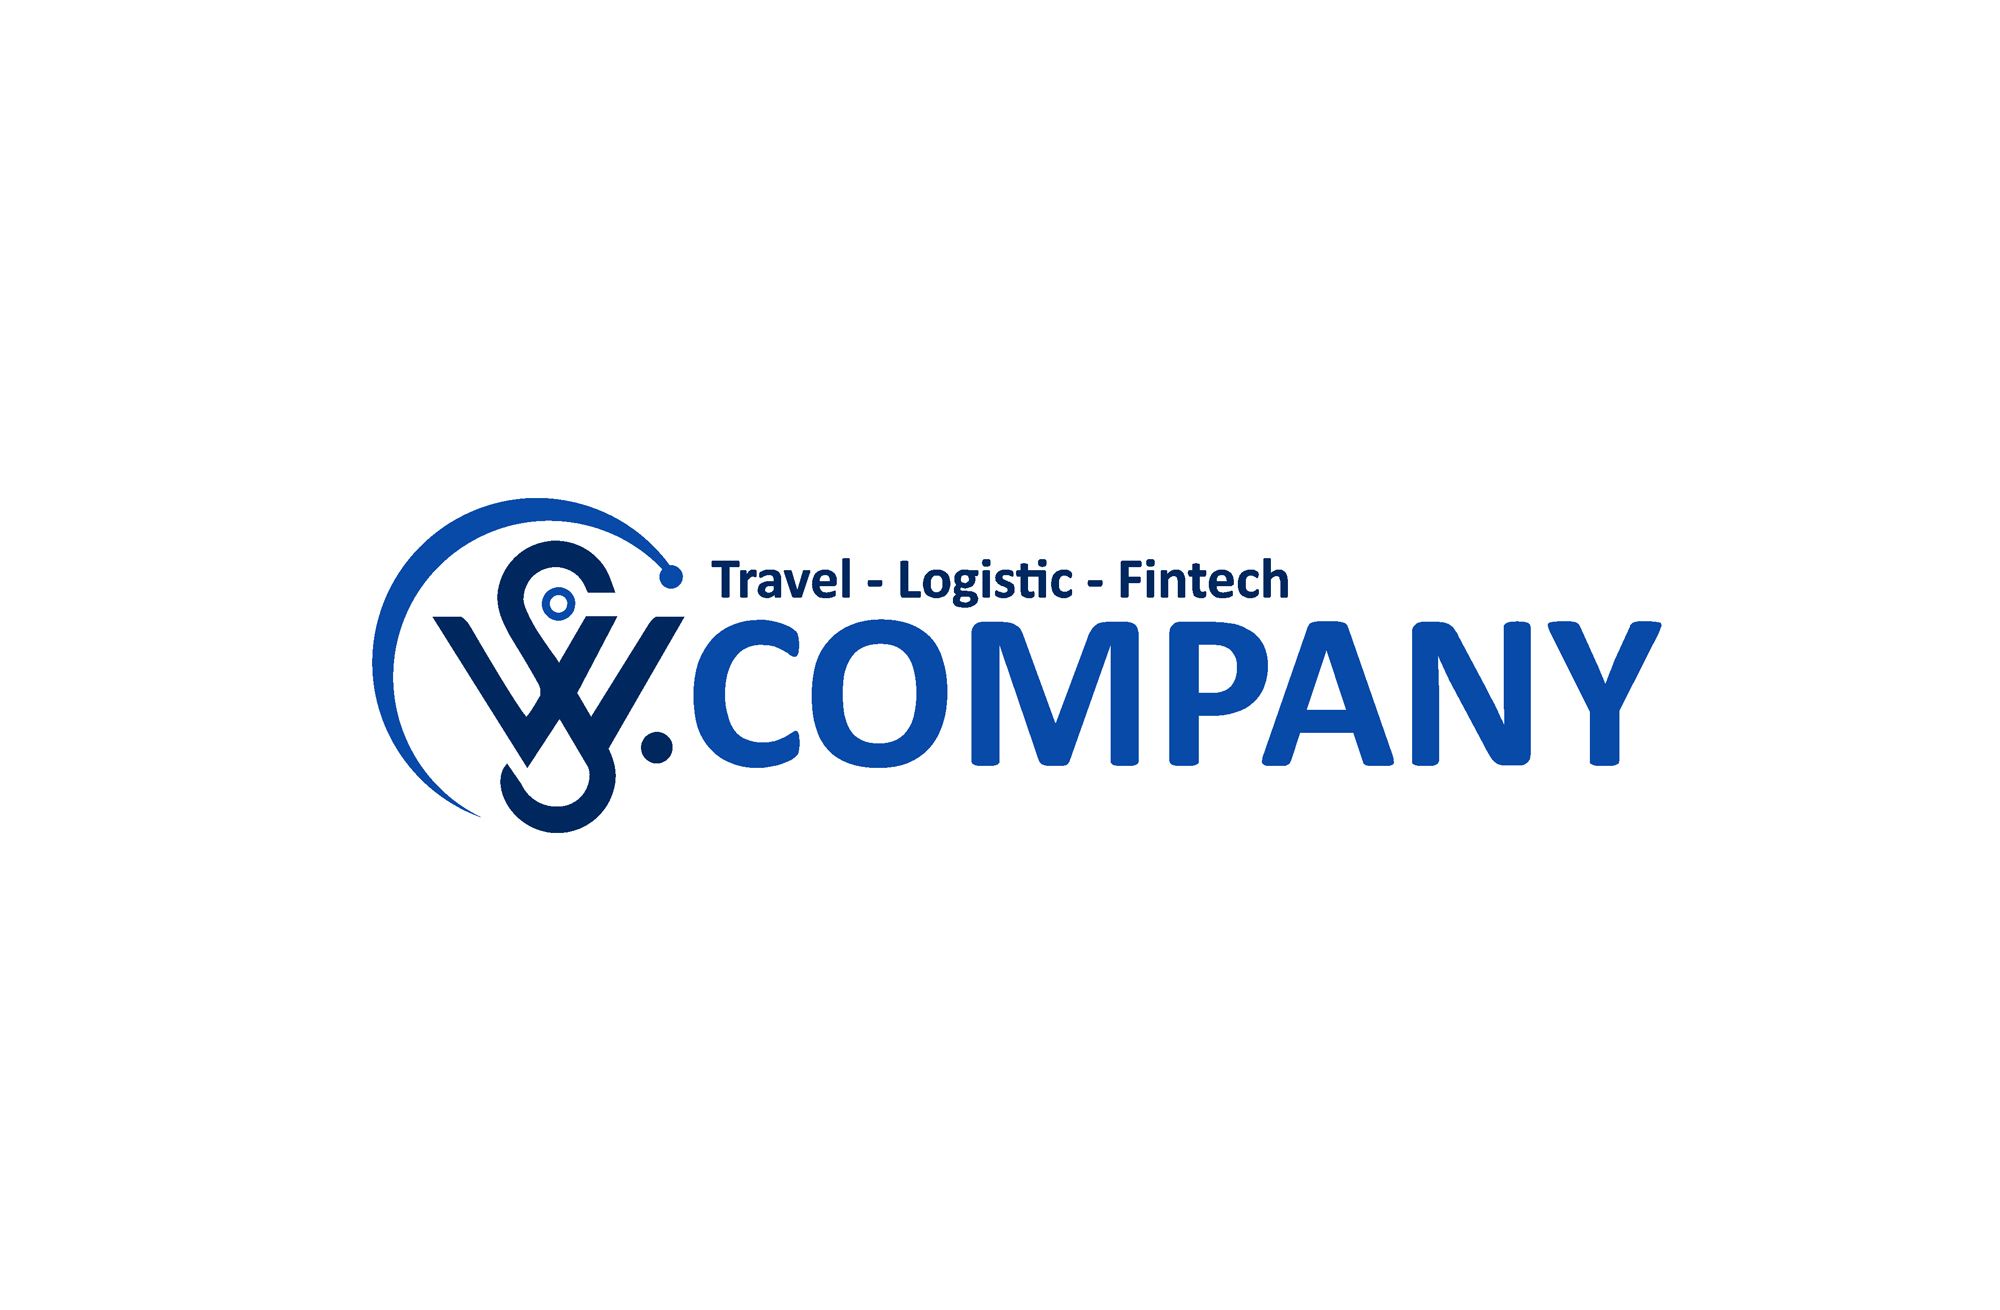 Логотип для WS.Company — Travel - Logistic - Fintech - дизайнер yulyok13